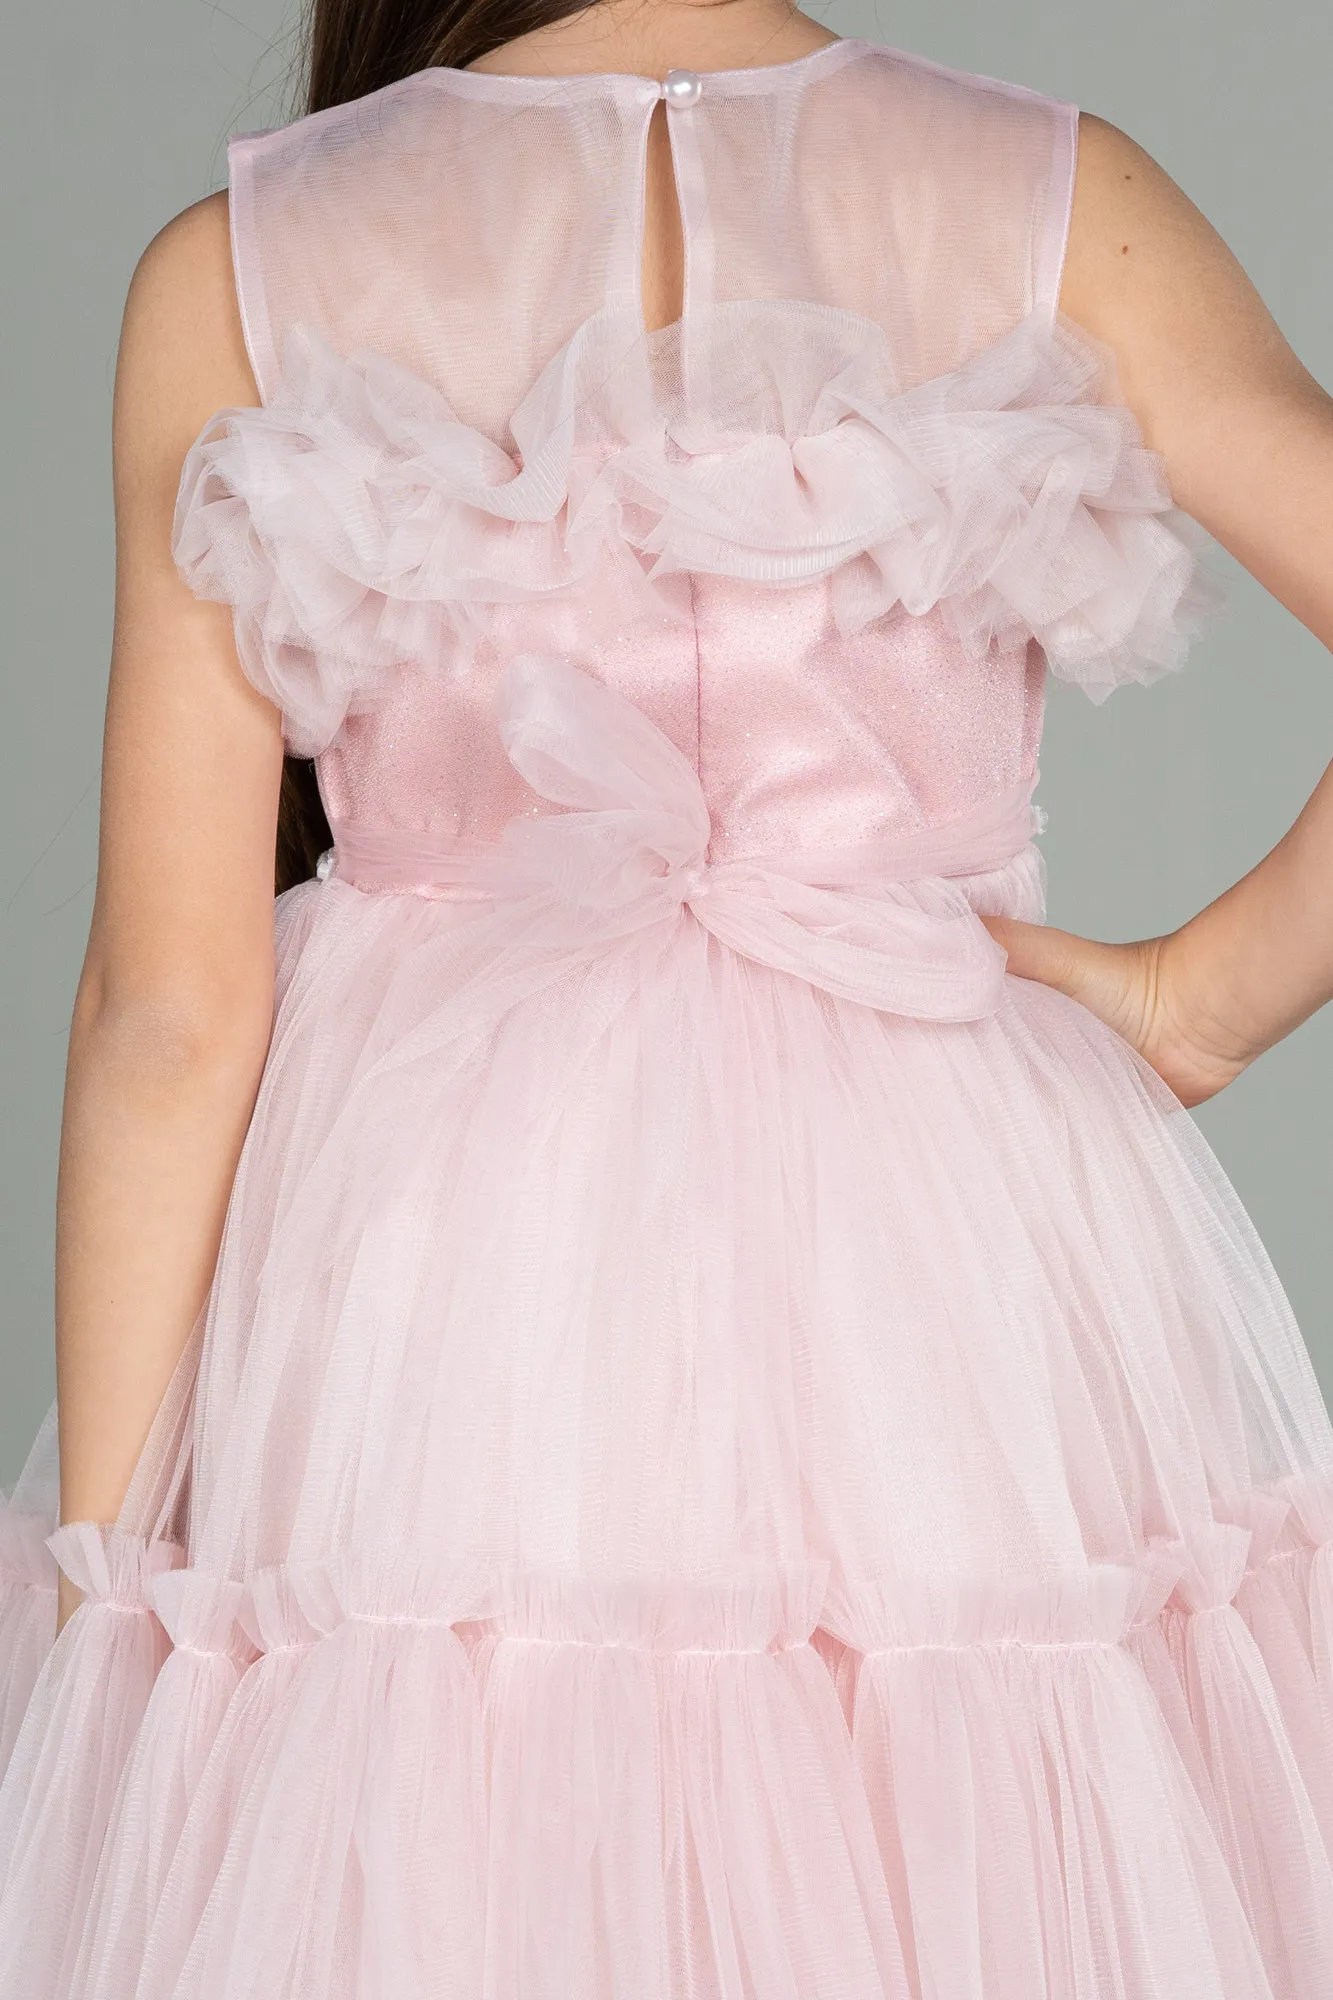 Powder Color-Short Girl Dress ABK1707